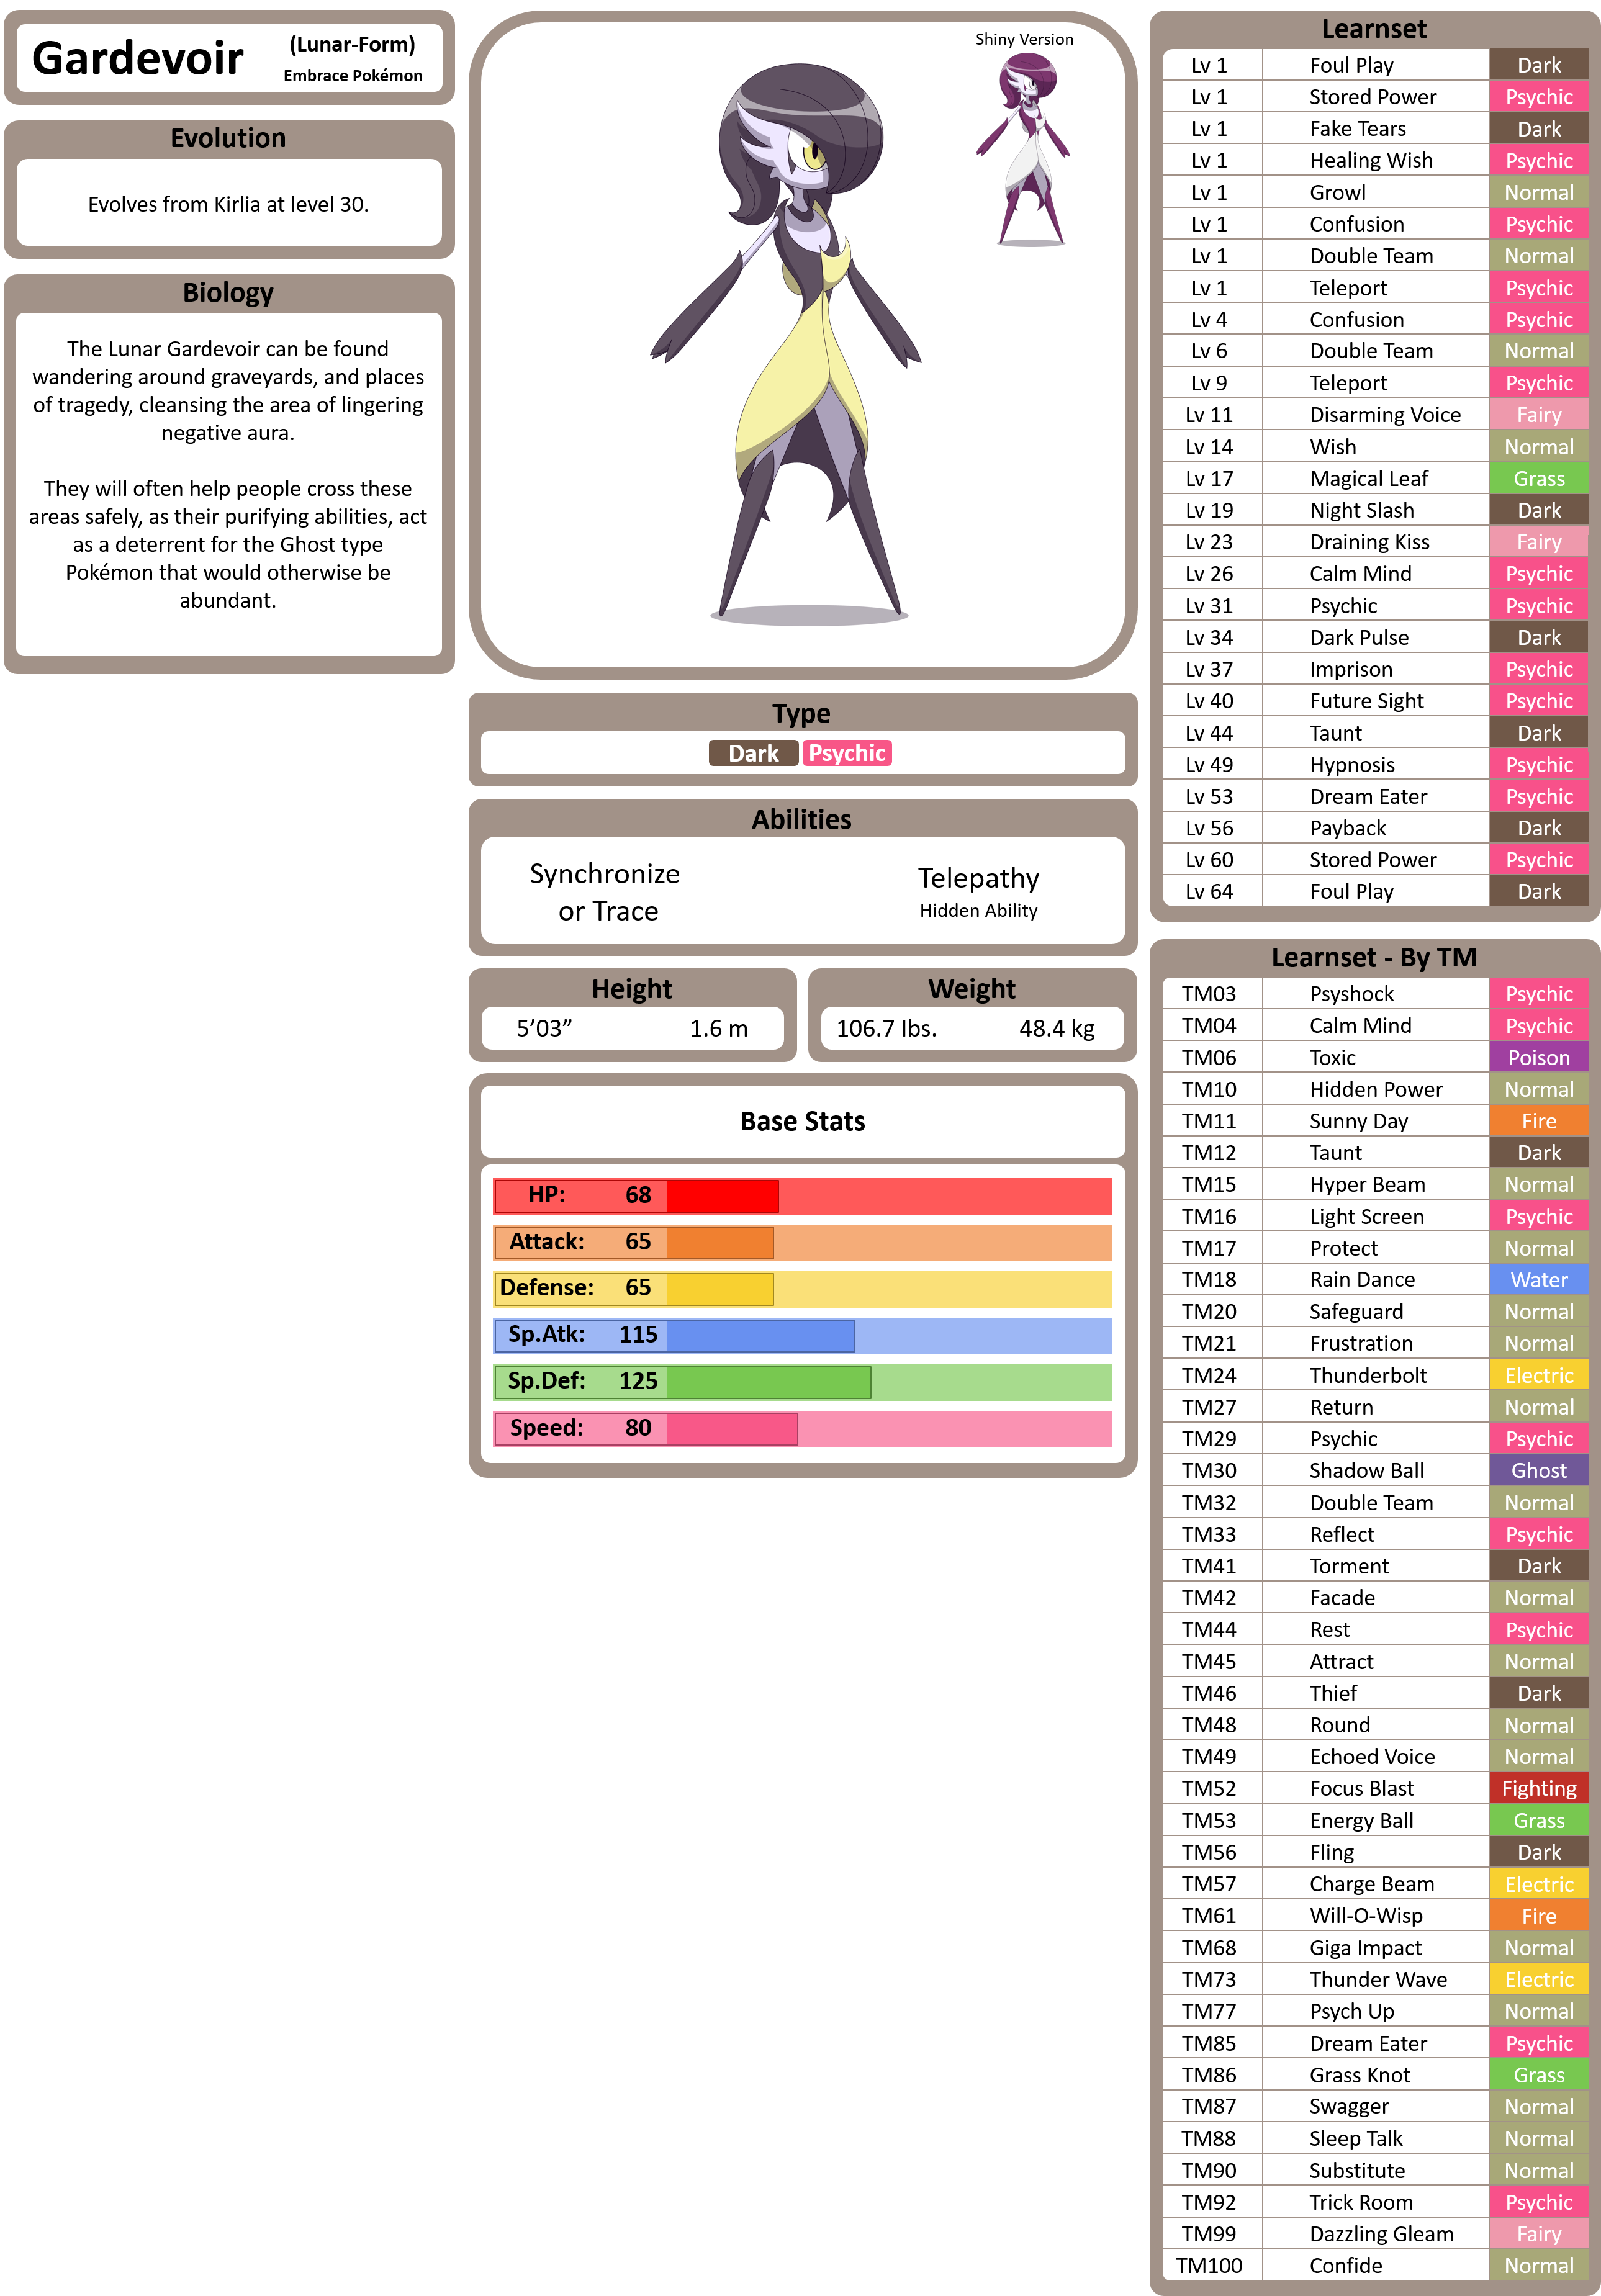 Pokemon 8282 Mega Gardevoir Pokedex: Evolution, Moves, Location, Stats